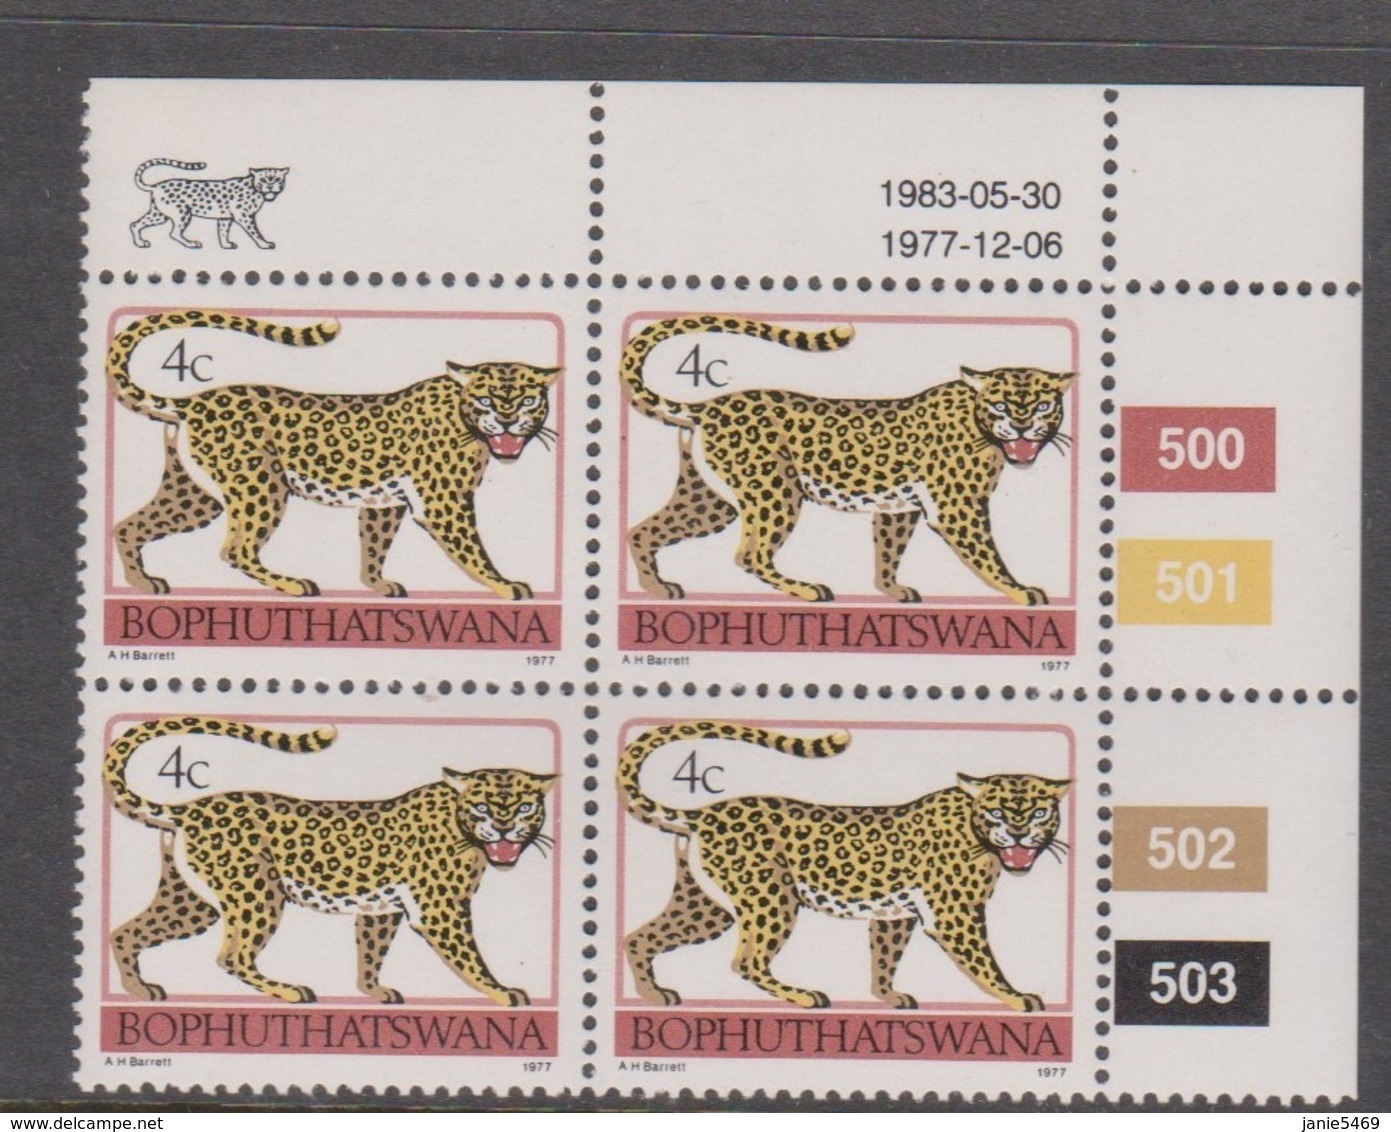 South Africa-Bophuthatswana SG R8a 1983 Tribal Totems,4c Leopard,Block 4 Reprint ,Mint Never Hinged - Bophuthatswana